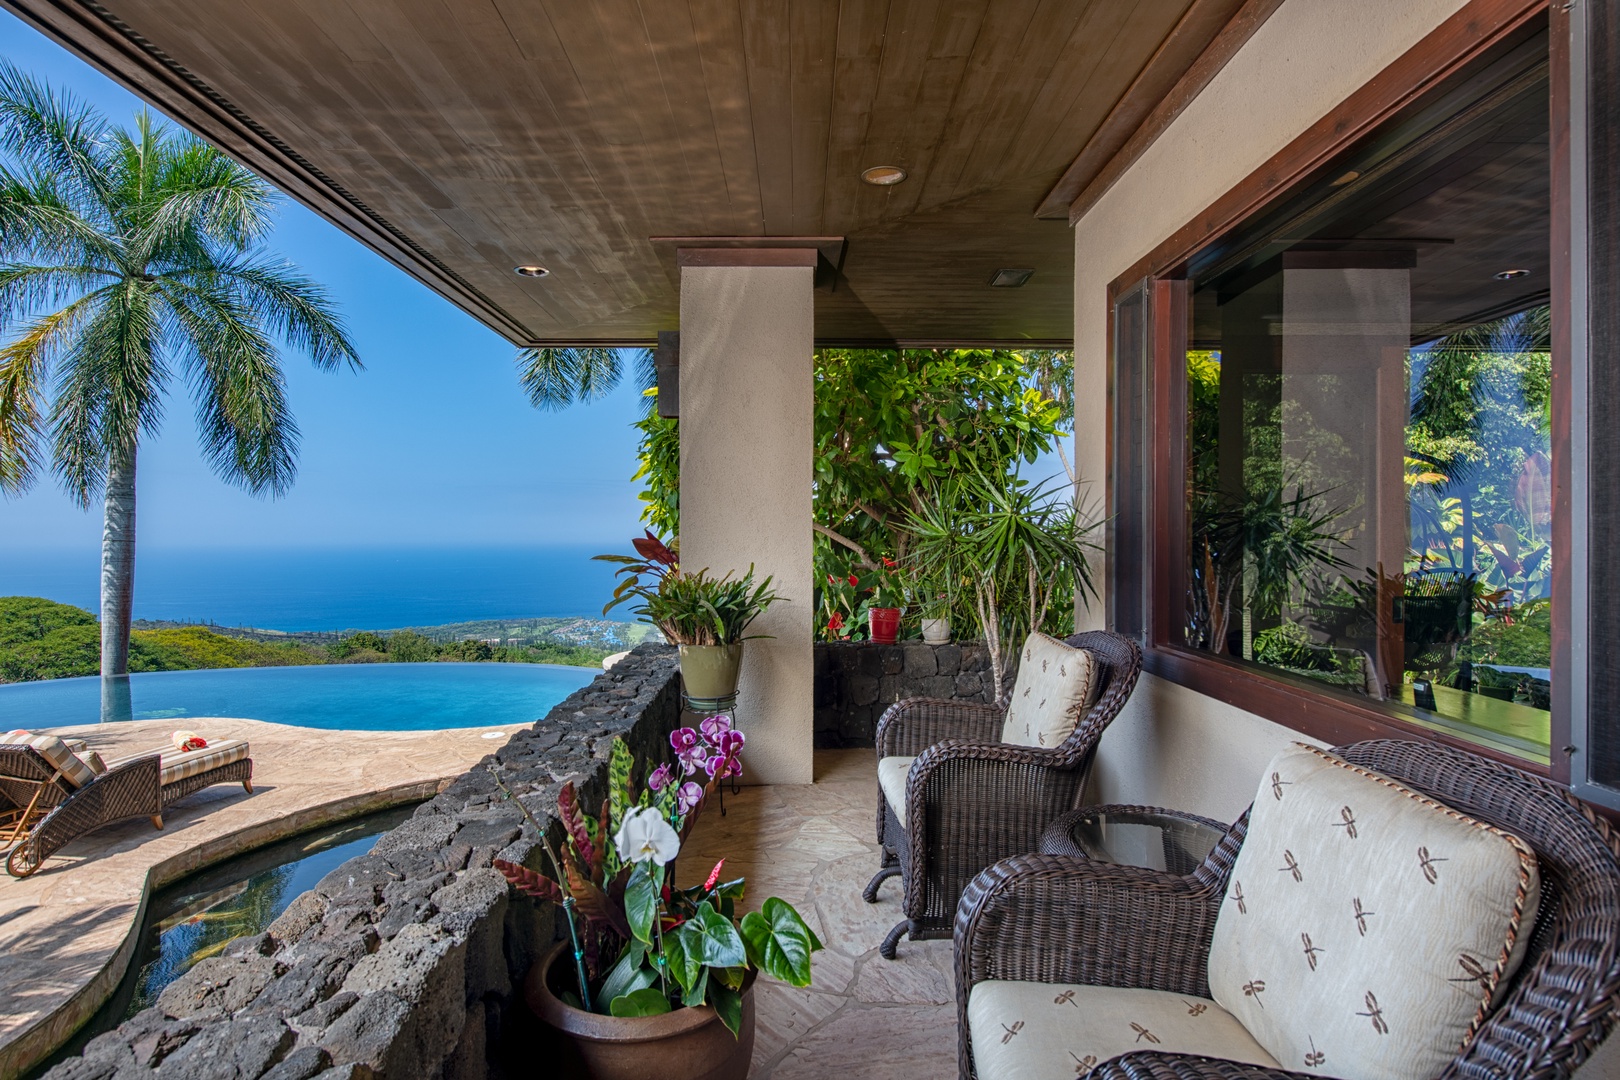 Kailua Kona Vacation Rentals, Hale Wailele** - Resort style lounging with amazing views